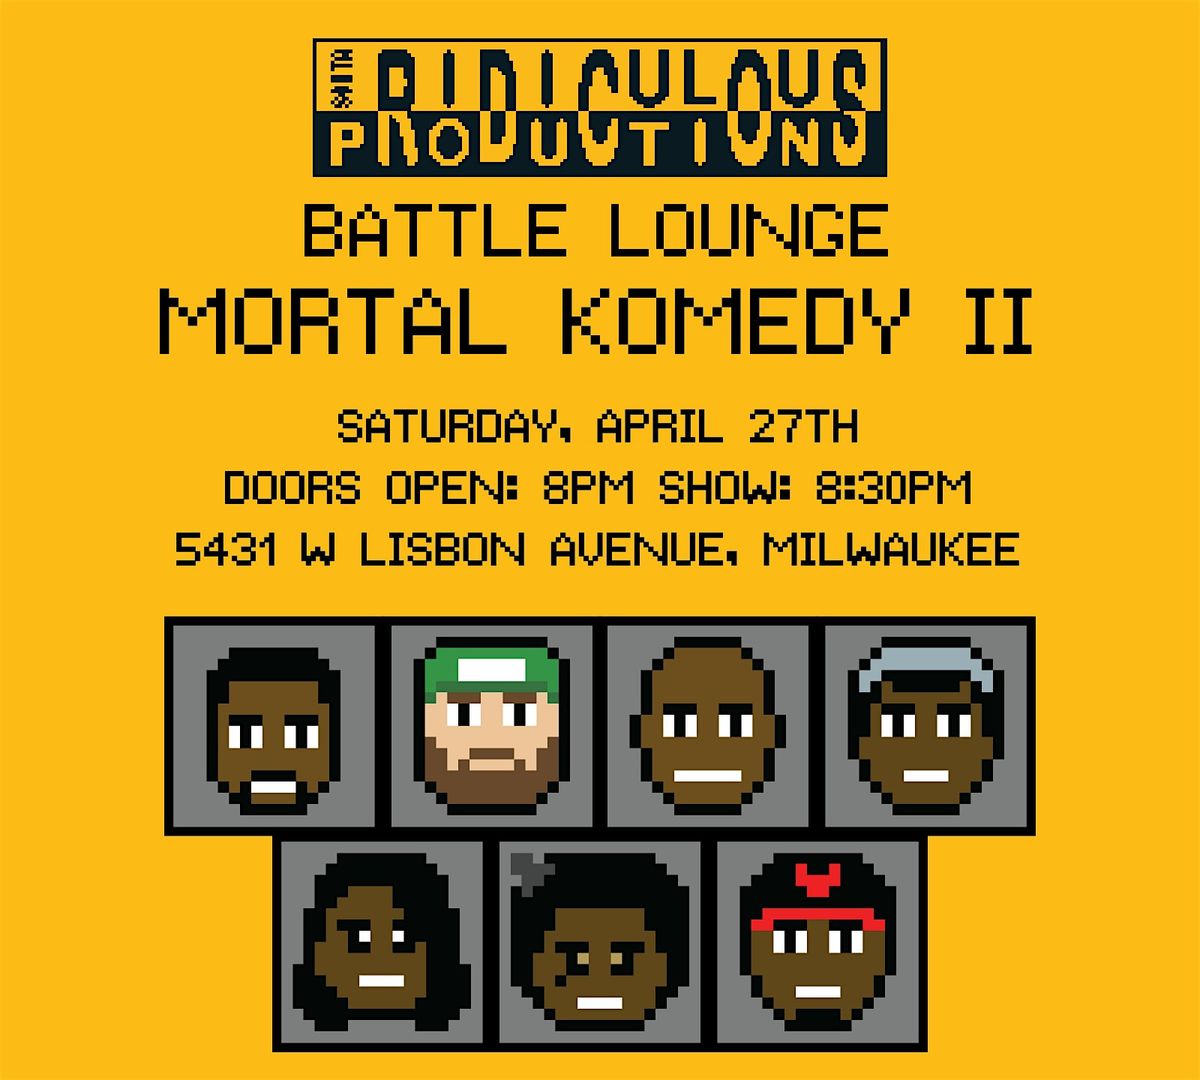 Battle Lounge: Mortal Komedy II Comedy Show